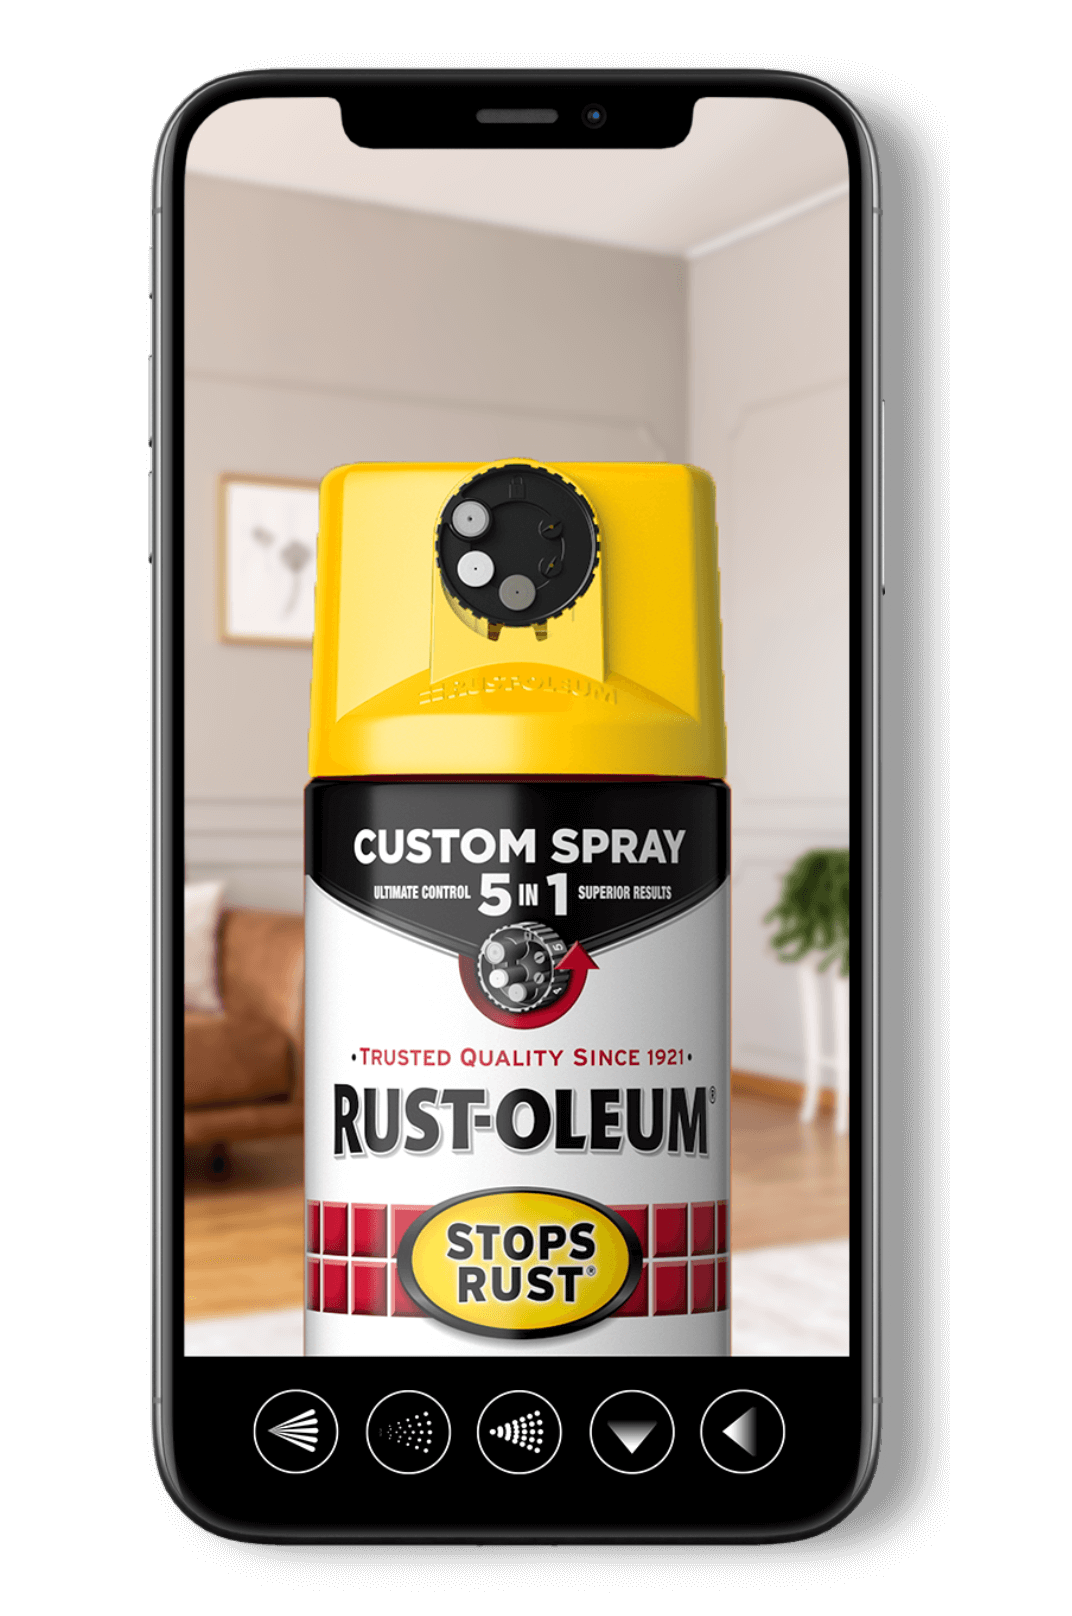 Rust-Oleum Stops Rust Custom Spray 5-in-1 Spray Can on Phone